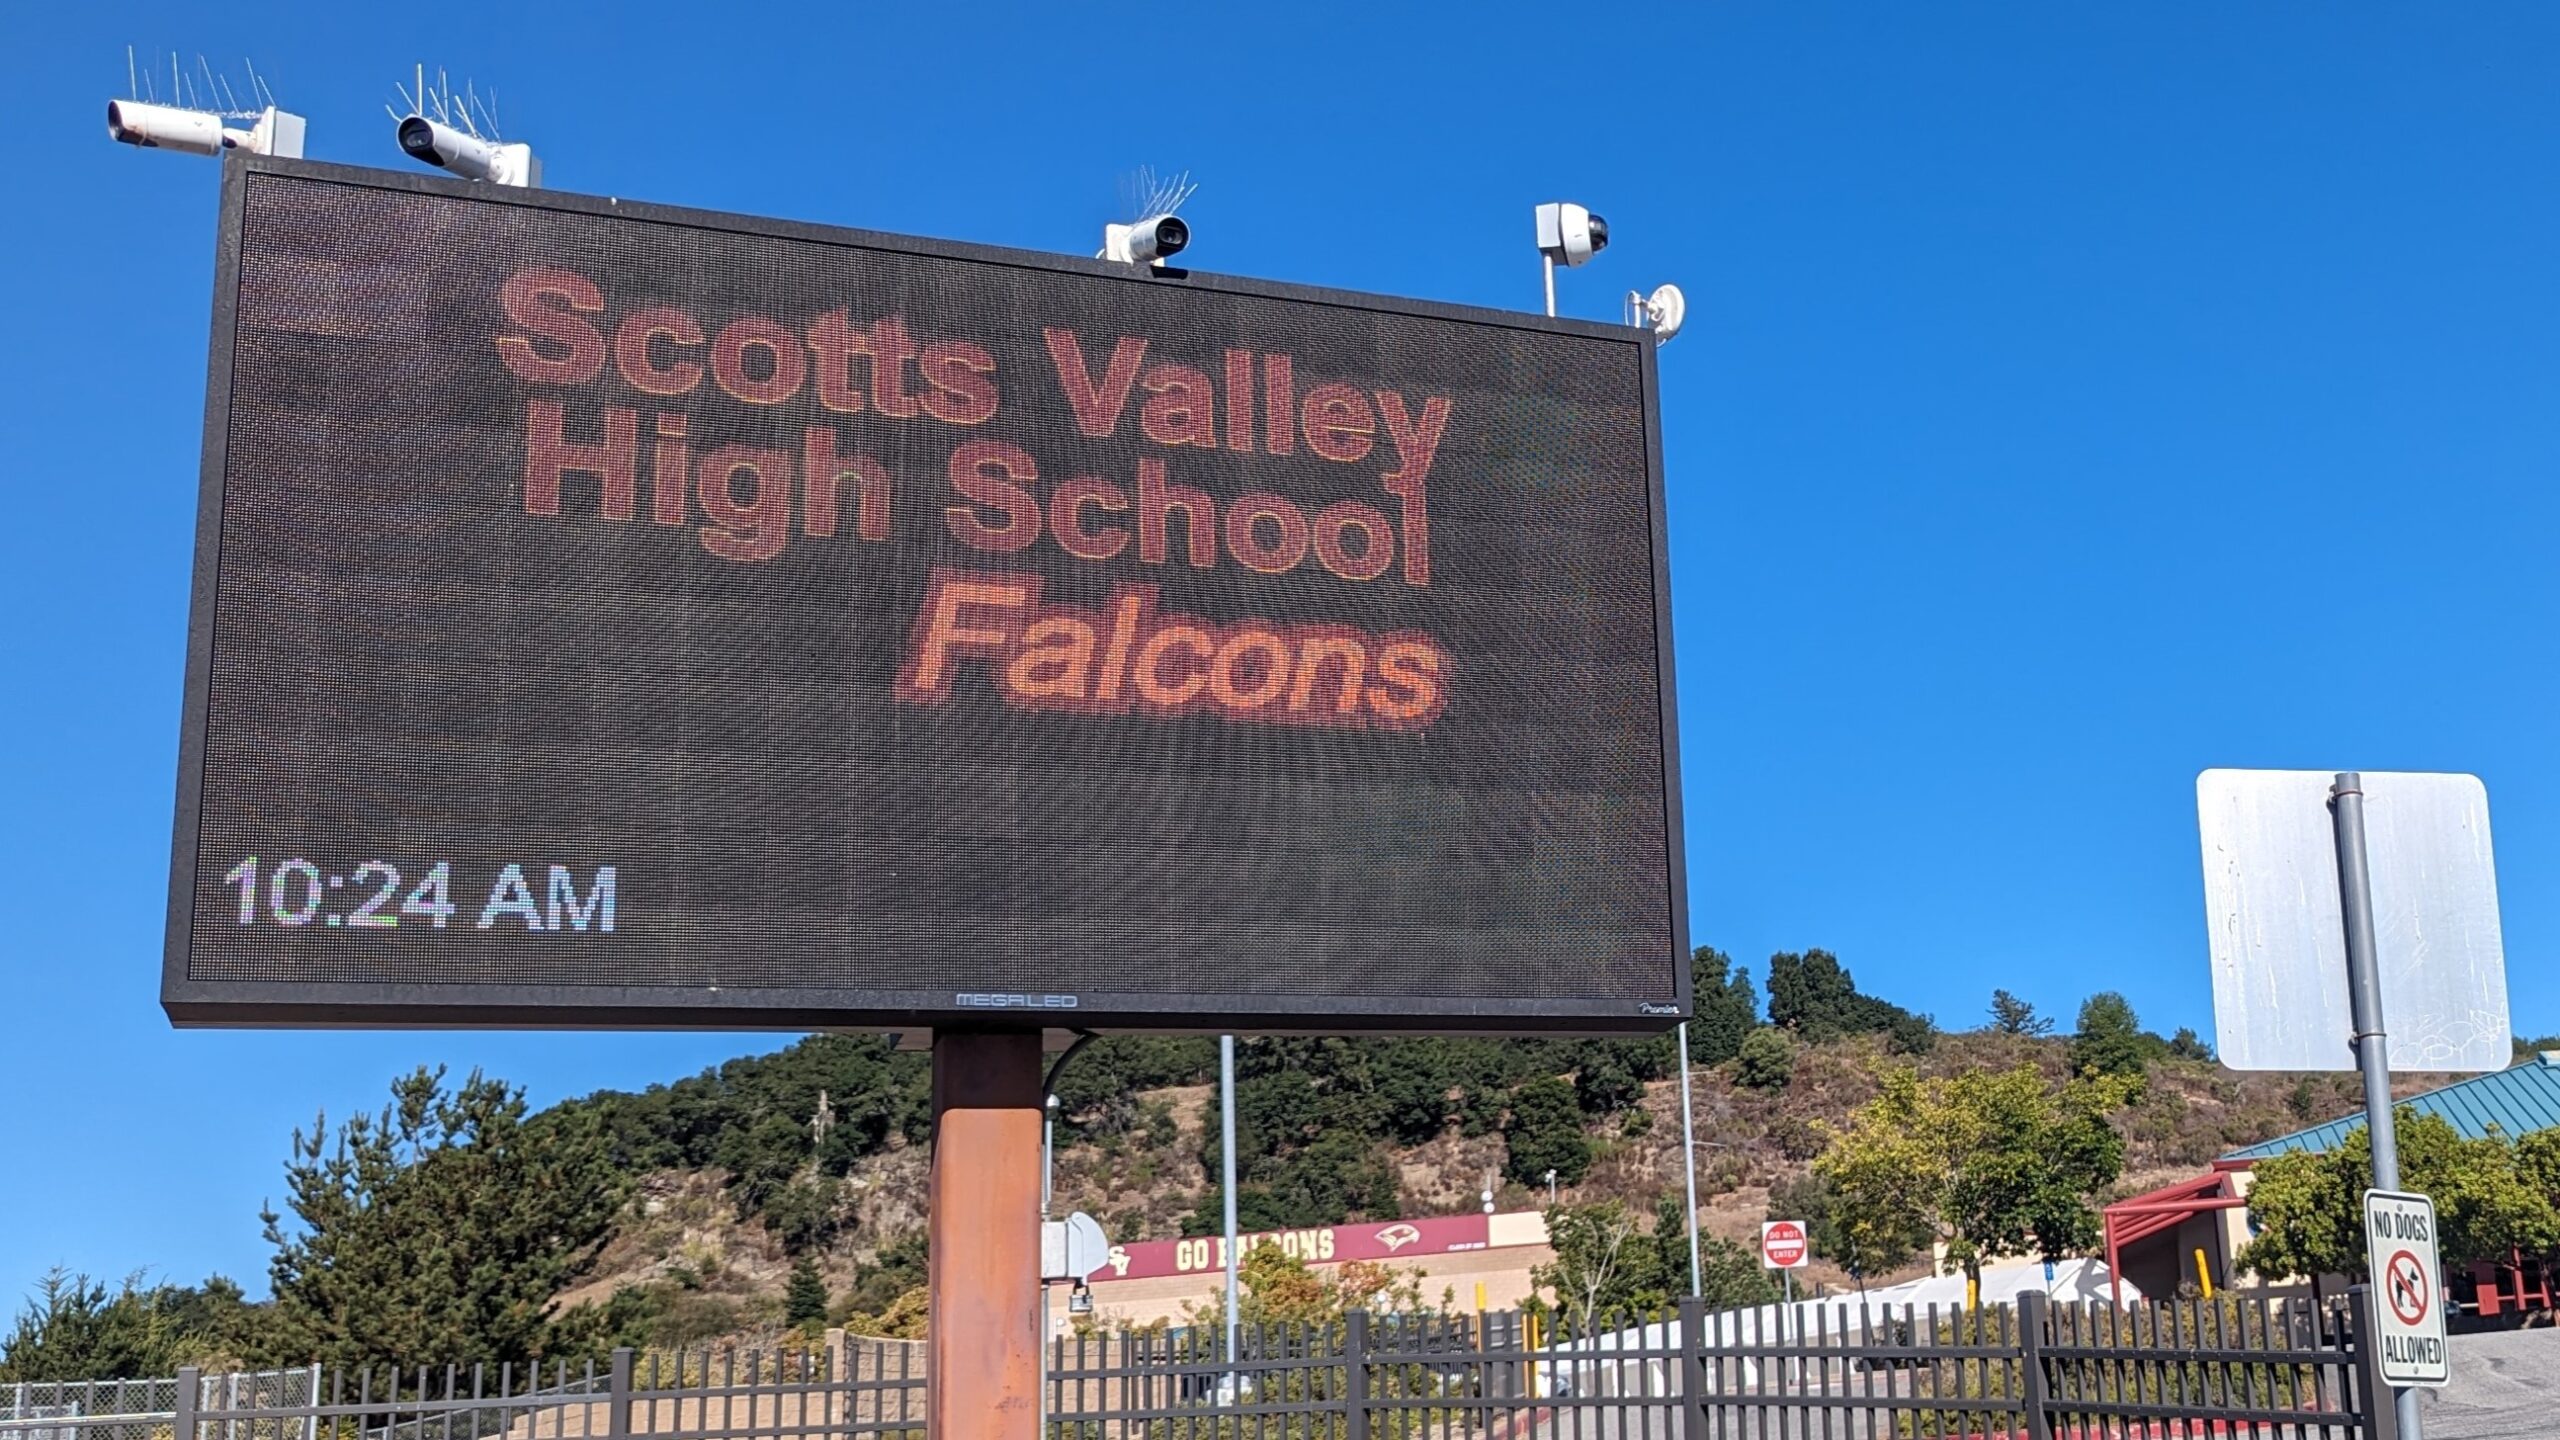 A sports scoreboard reads Scotts Valley High School Falcons.